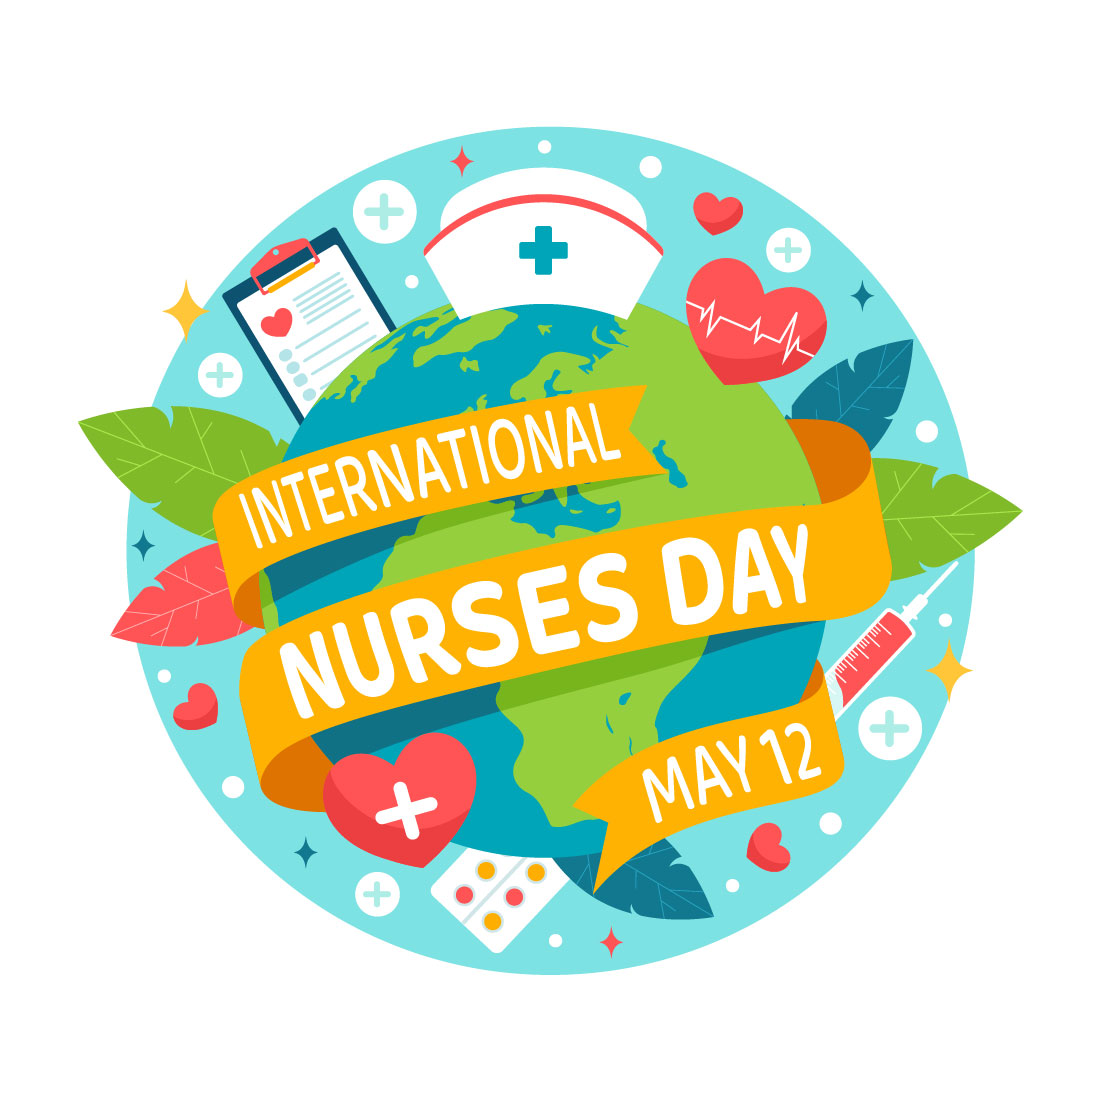 12 International Nurses Day Illustration preview image.